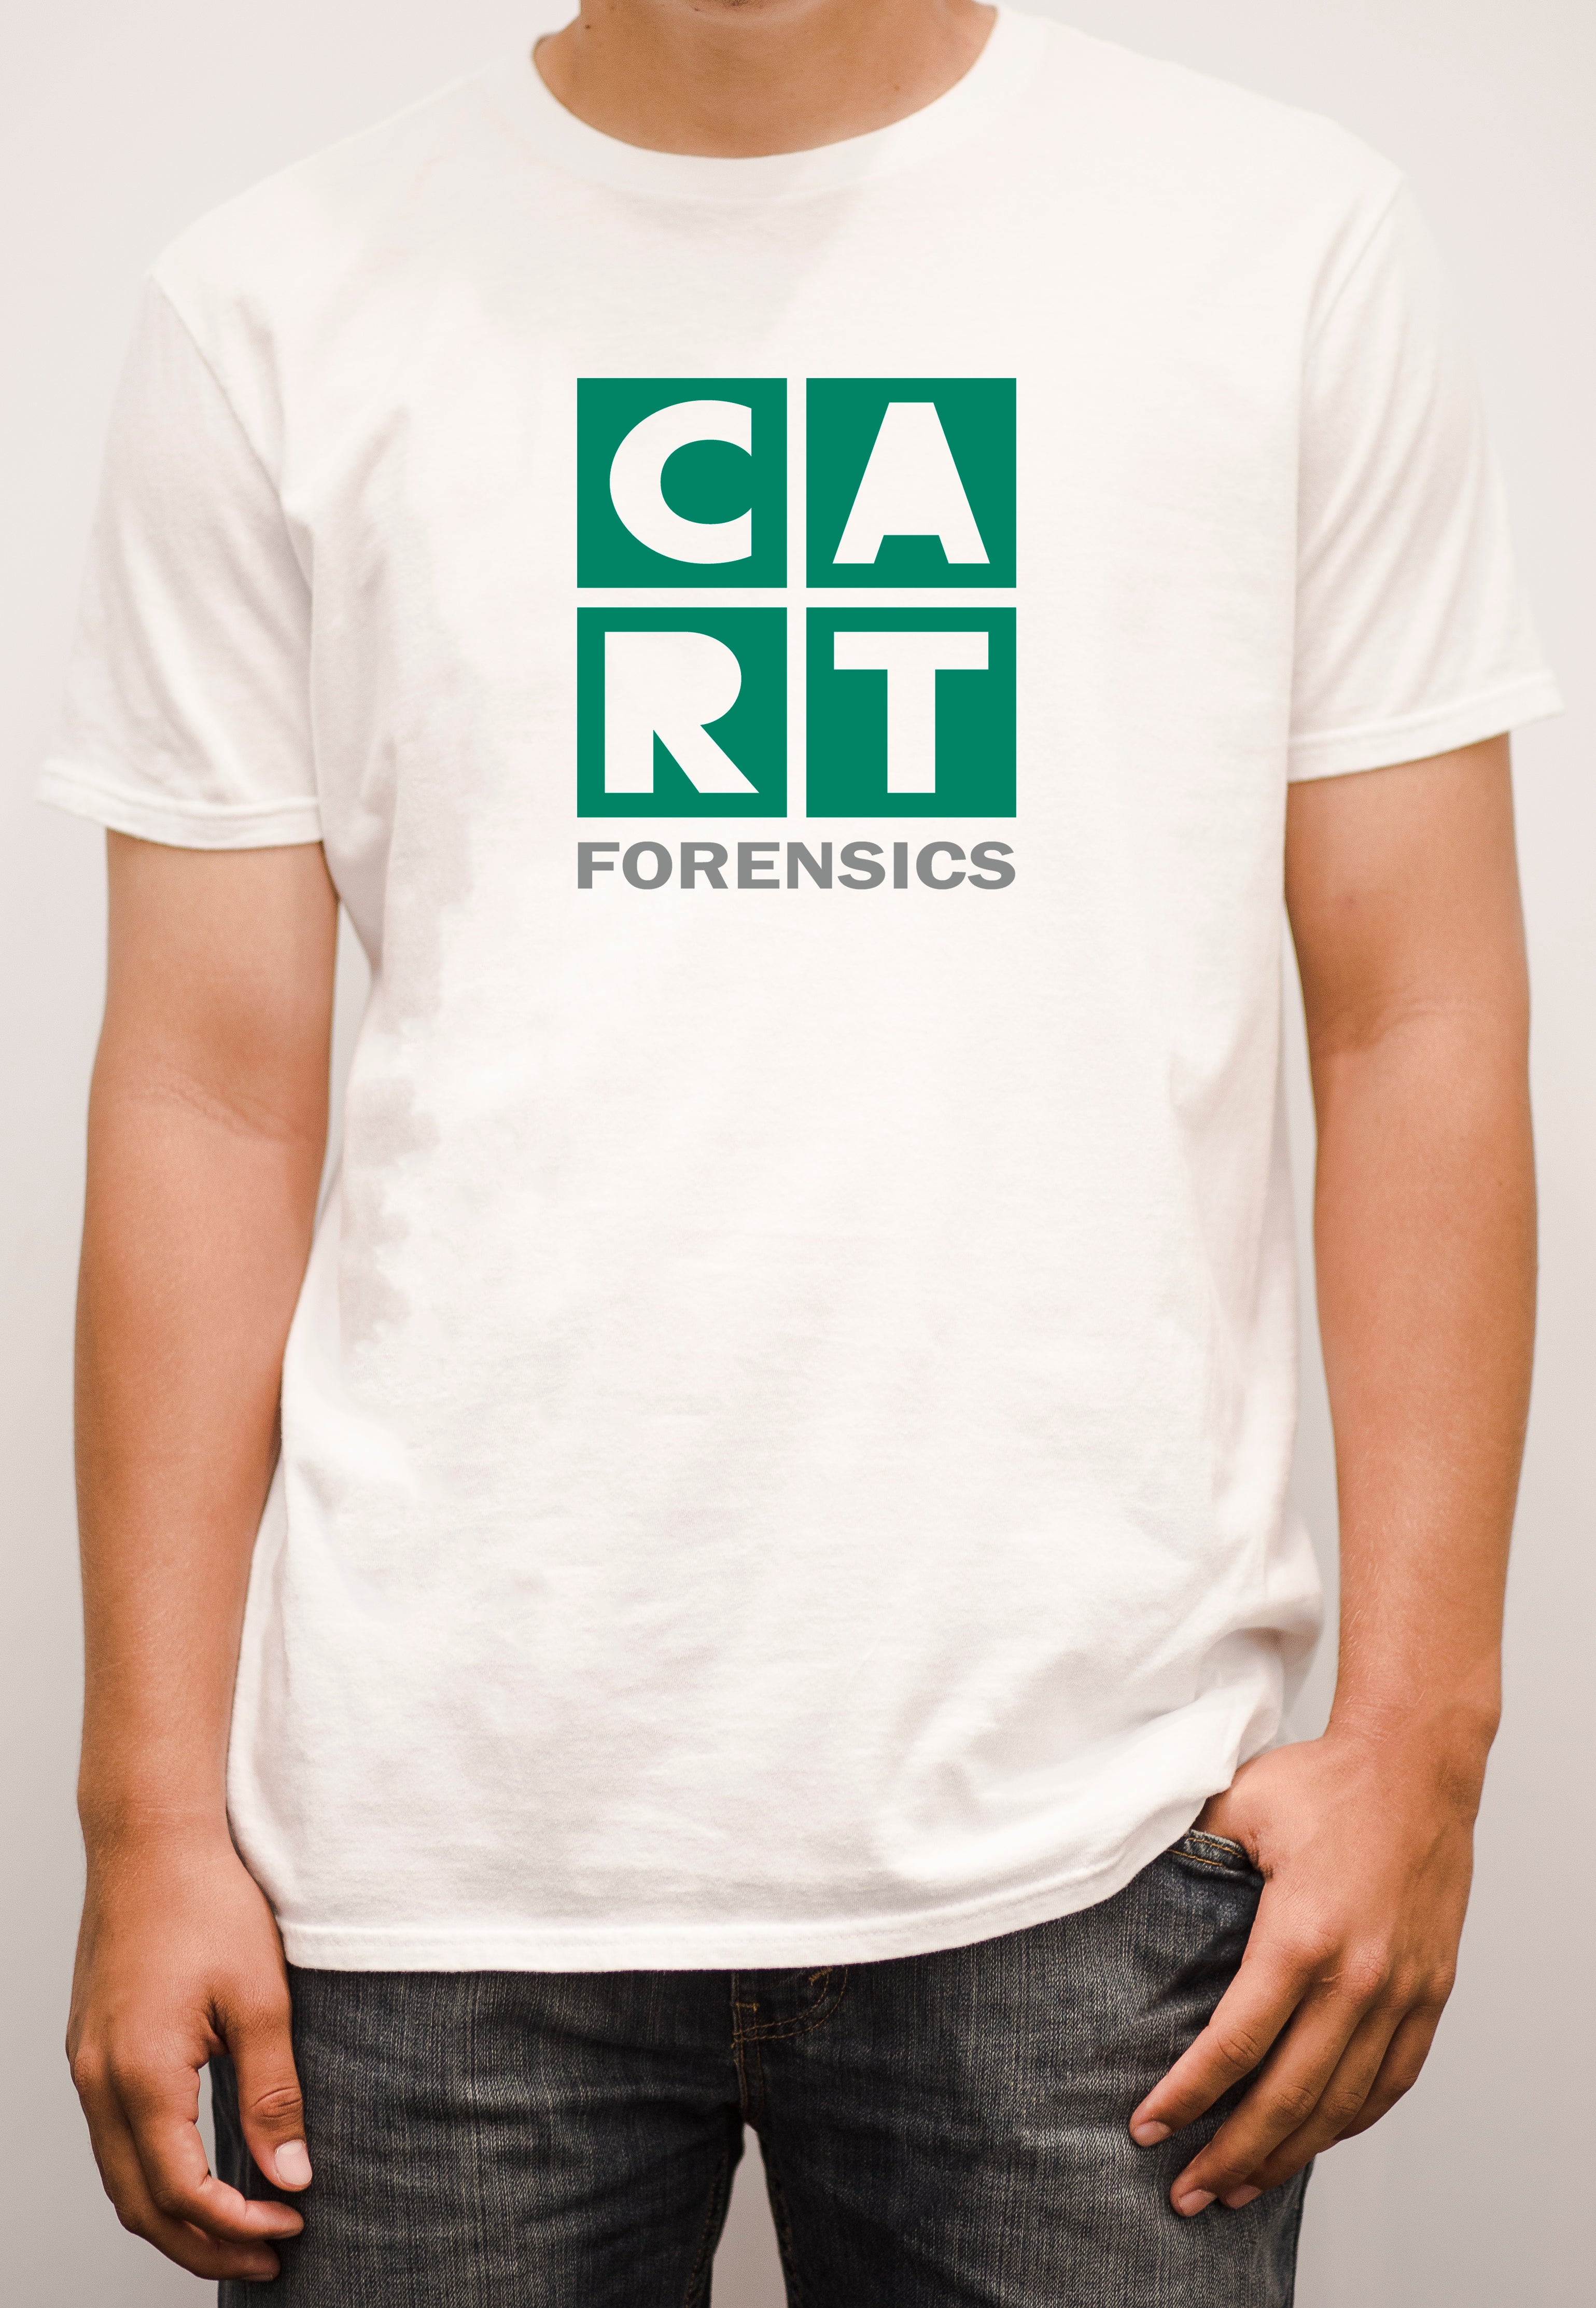 Short sleeve t-shirt - forensics grey/green